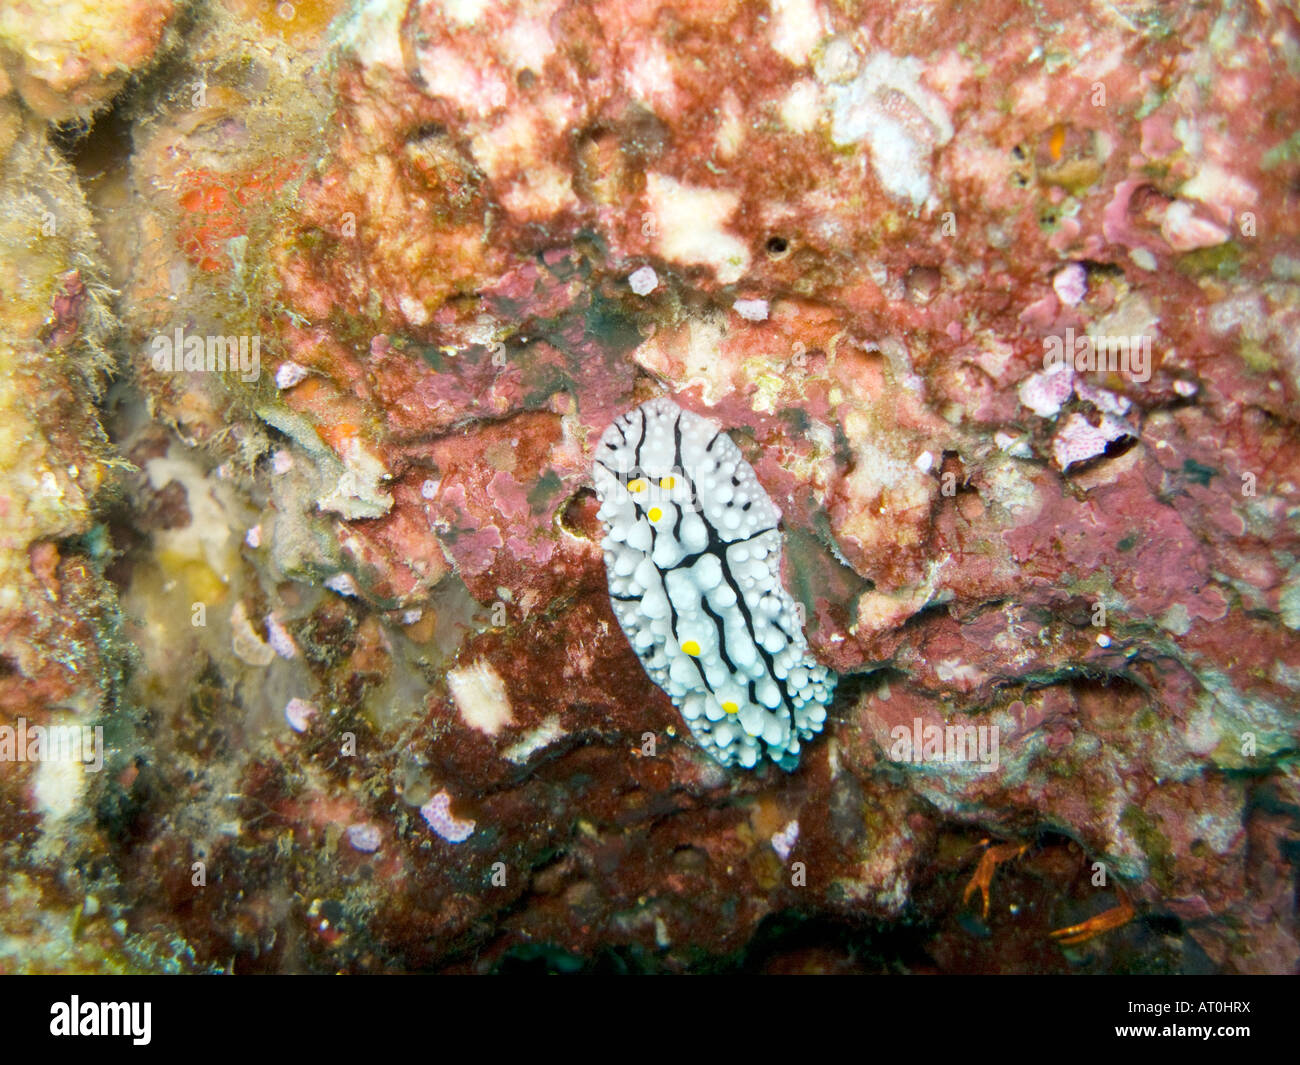 Elegant phyllidia nudibranch, Phyllidia elegans February 2008, Surin islands, Andaman sea, Thailand Stock Photo